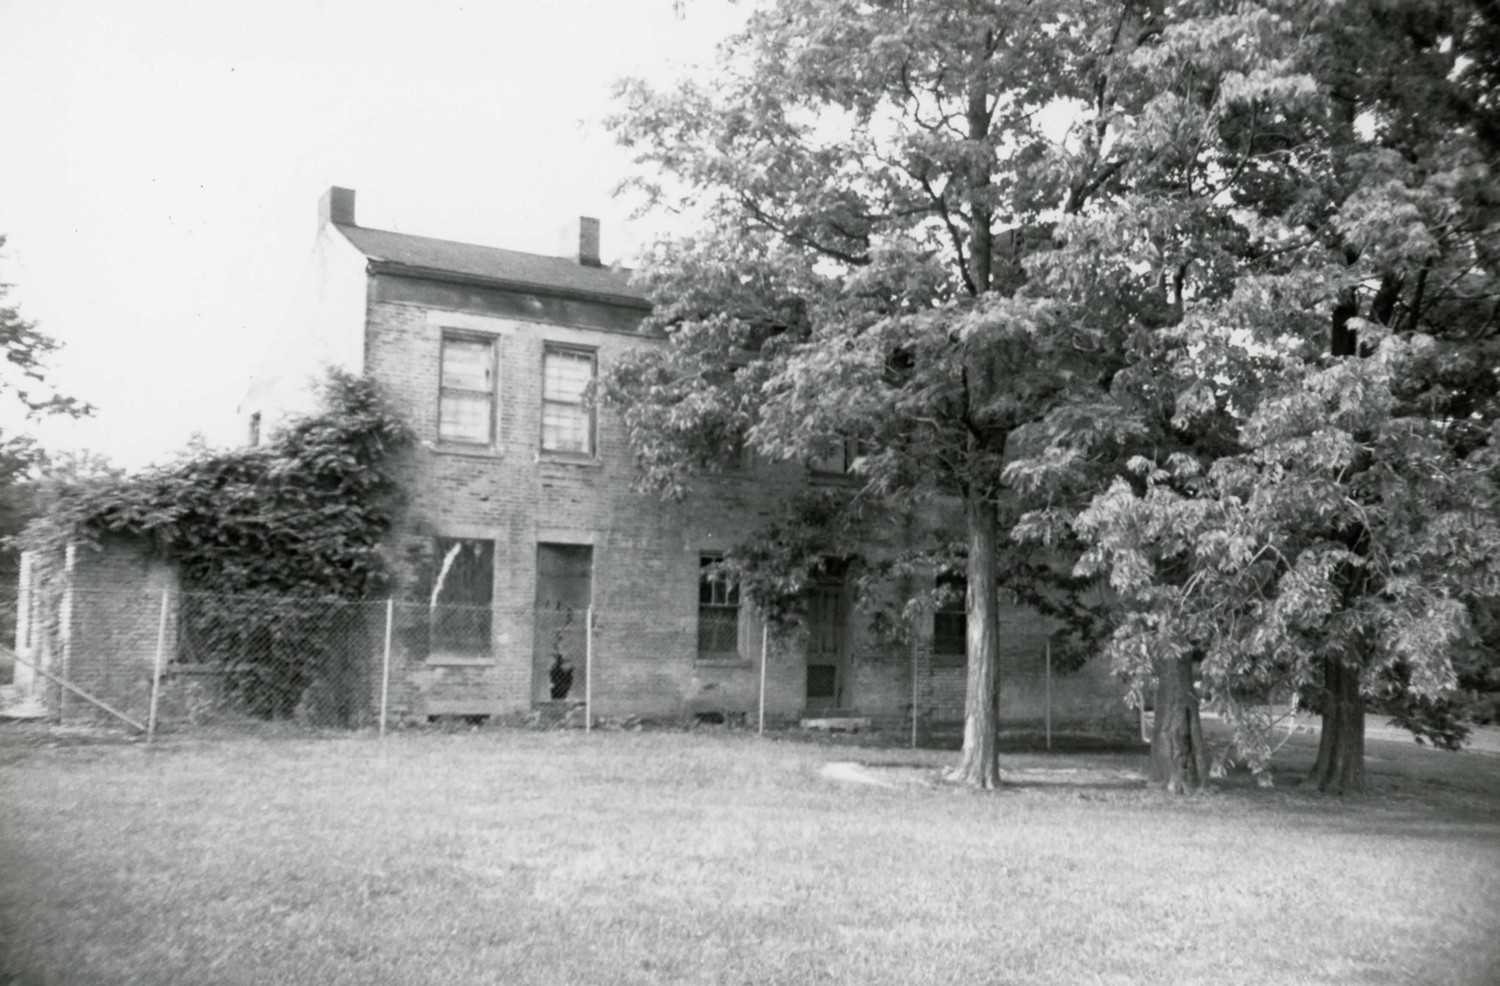 Morgan-Hueston House, Fairfield Ohio South elevation (1989)